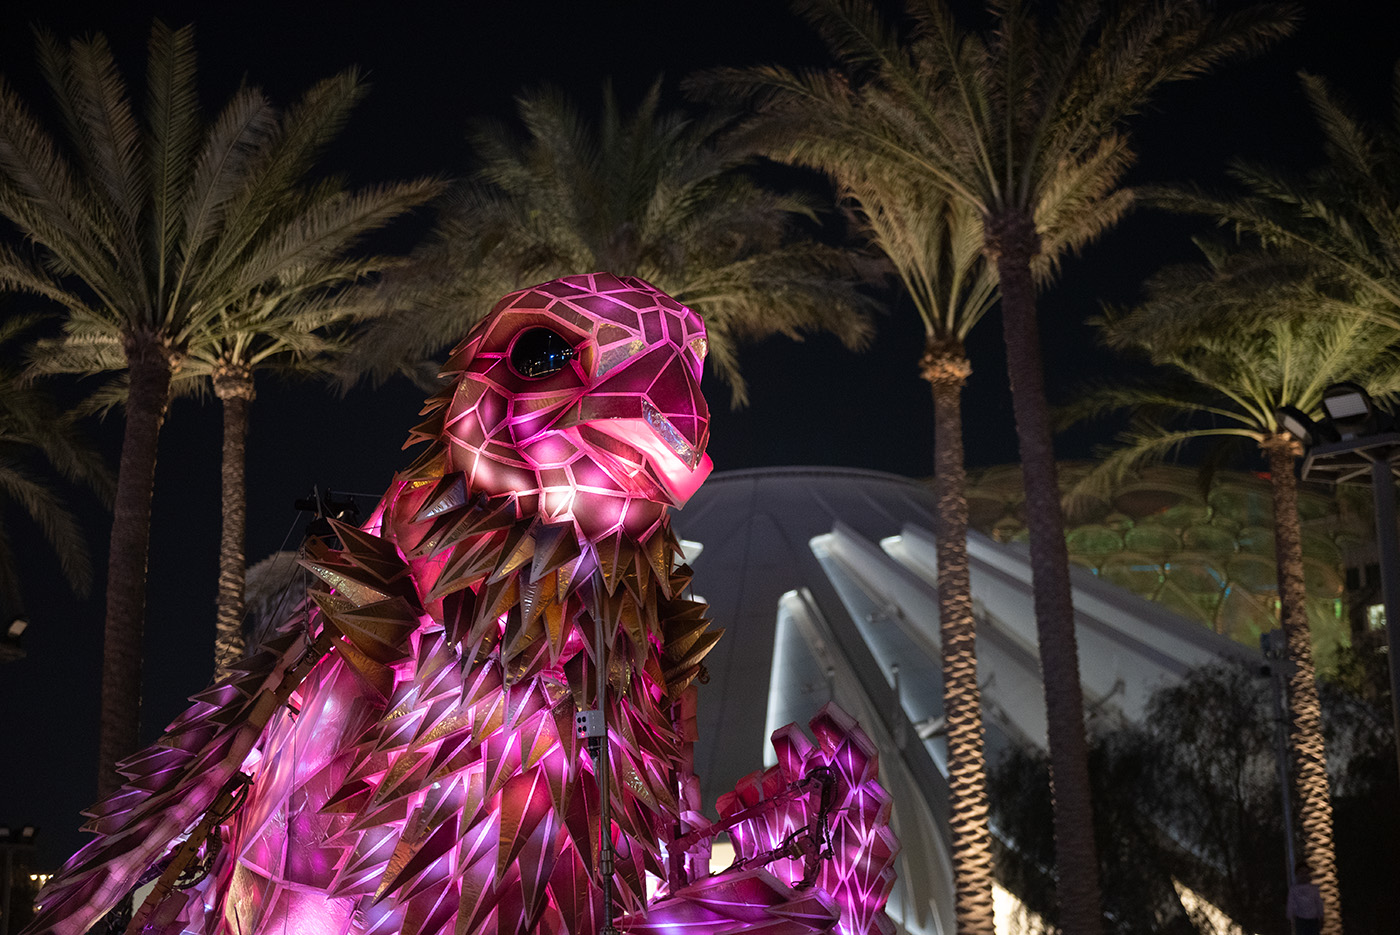 Glowing faceted pink bird sculpture